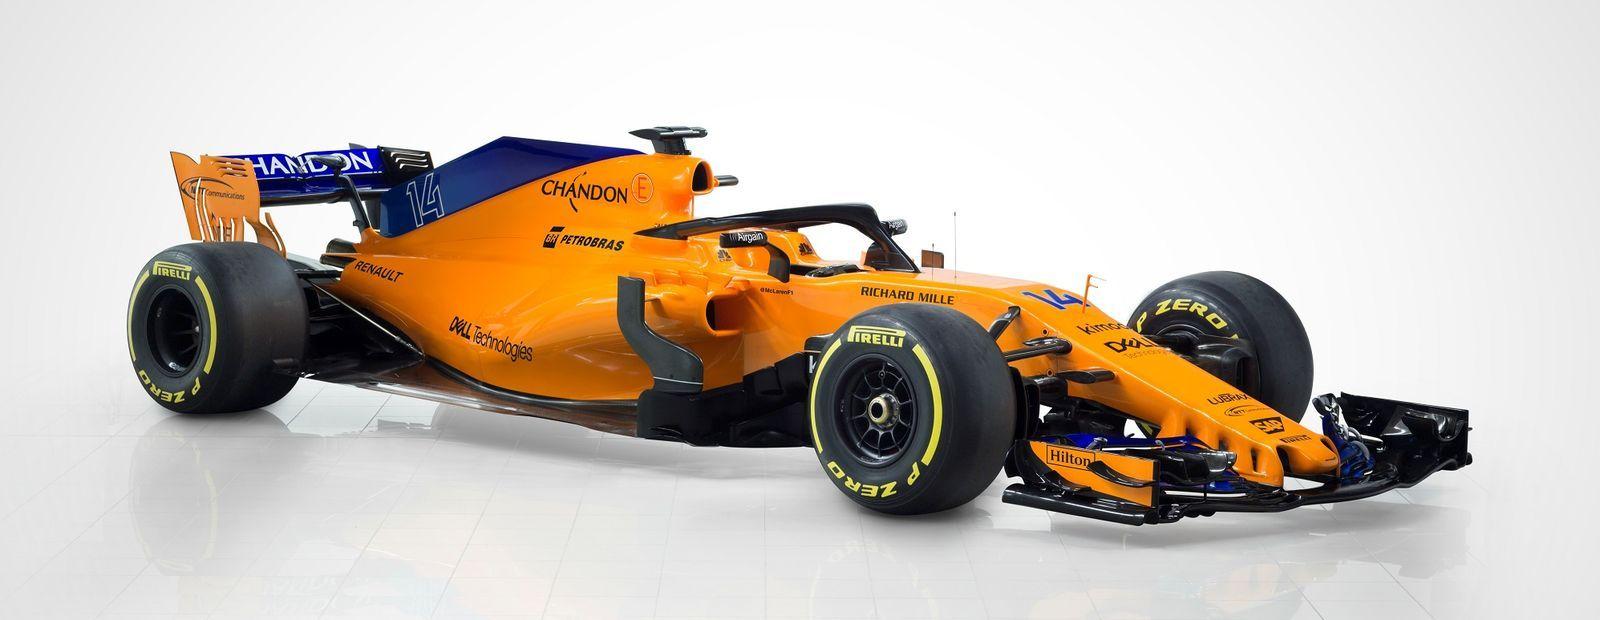 McLaren F1 Racing Logo - McLaren Formula 1 - McLaren unveils striking 2018 challenger: the MCL33